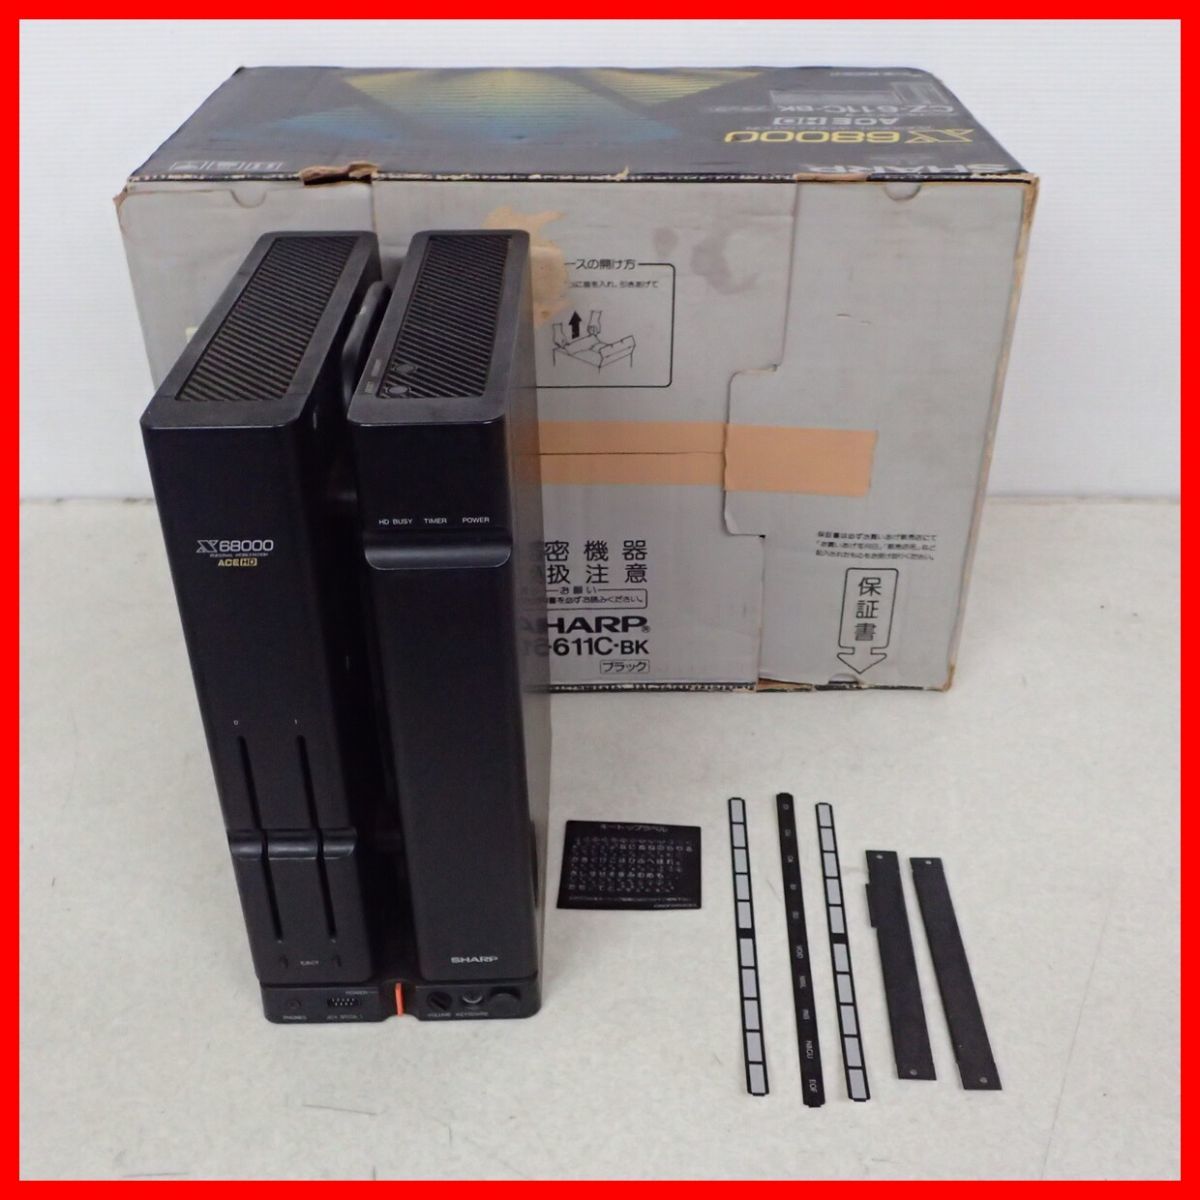 ◇SHARP パーソナルコンピュータ X68000 ACE HD CZ-611C-BK 本体